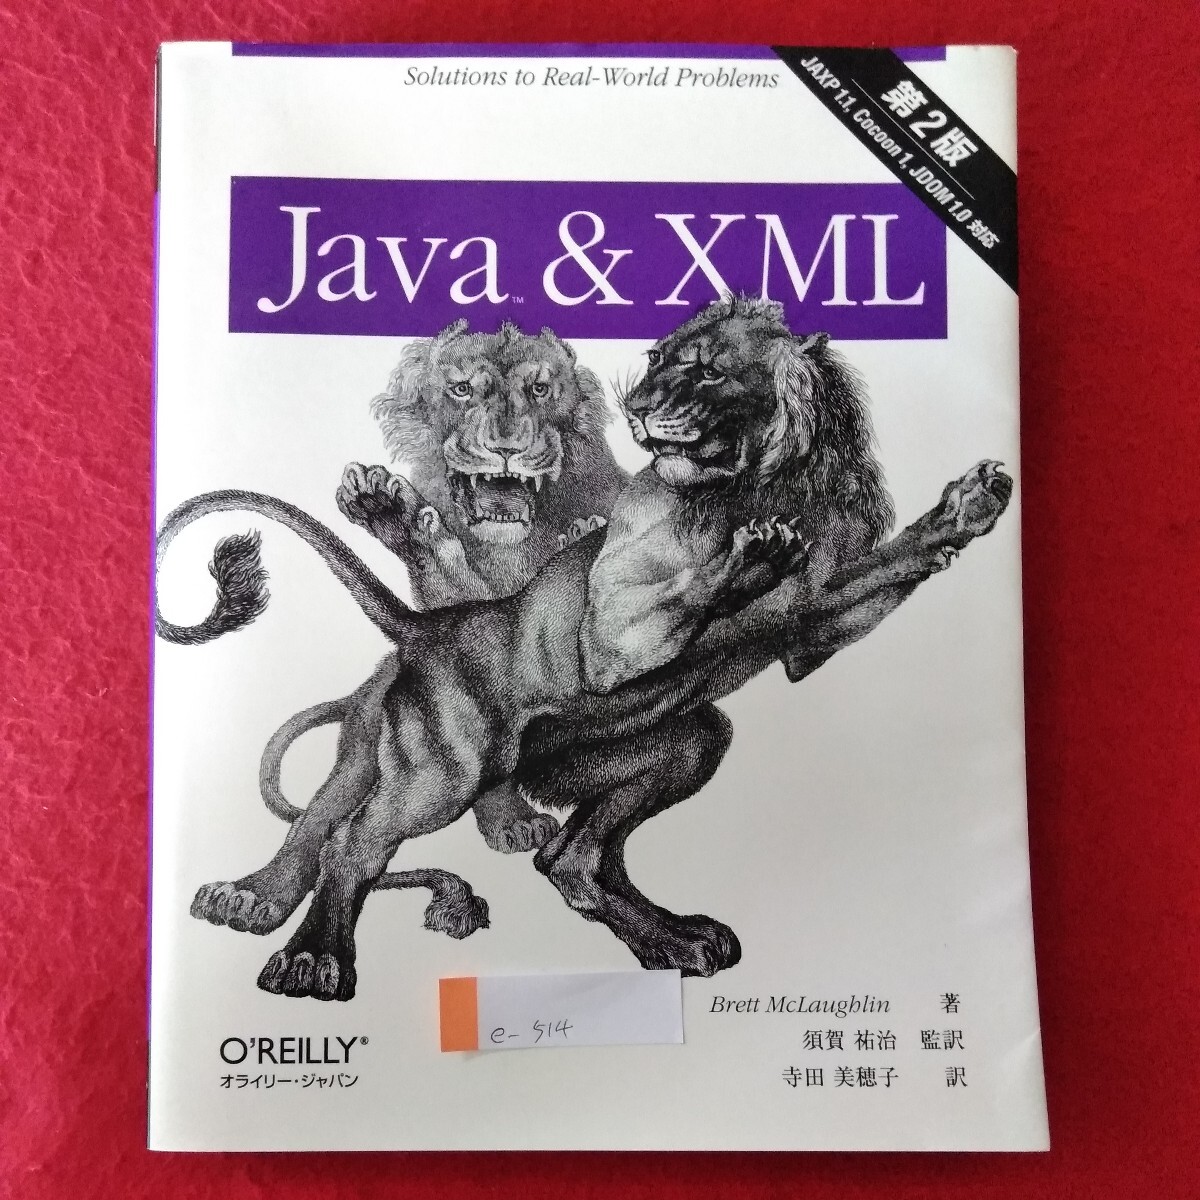 e-514 Java&XML no. 2 версия 2002 год 5 месяц 25 день первая версия no. 1. выпуск автор /Brett McLaughlin( Brett *mak черновой Lynn ) выпуск / Ora i Lee * Japan *3